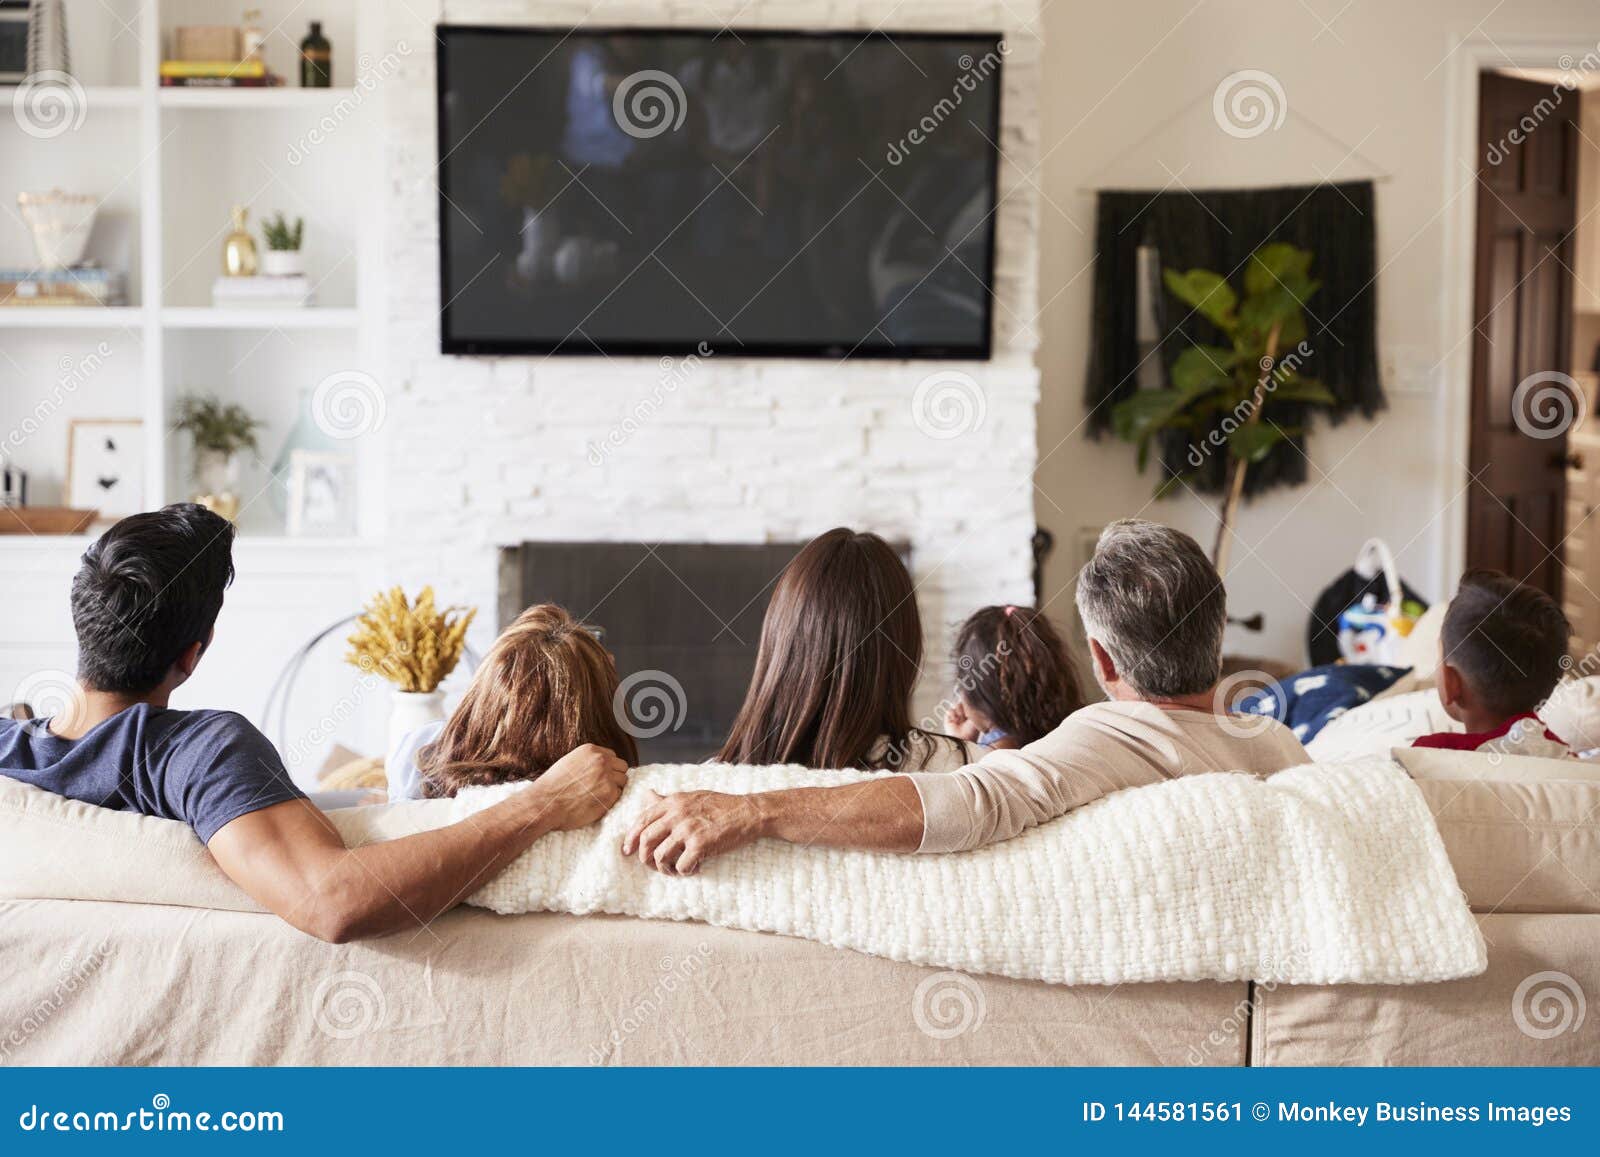 back view of three generation hispanic family sitting on the sofa watching tv